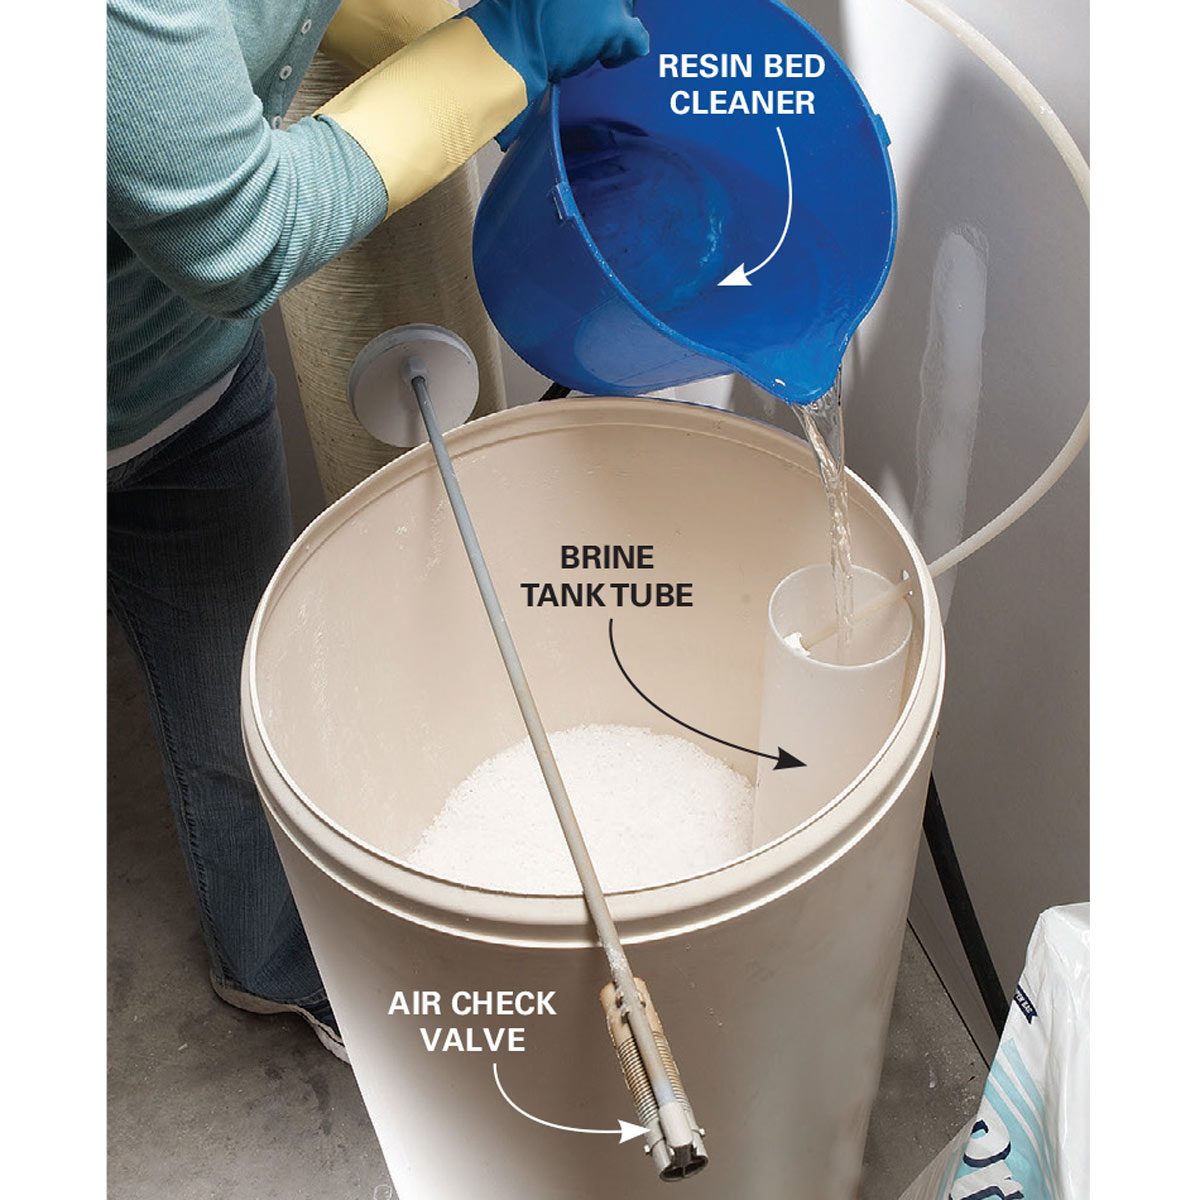 How to Clean Water Softener (Resin & Brine Tank)